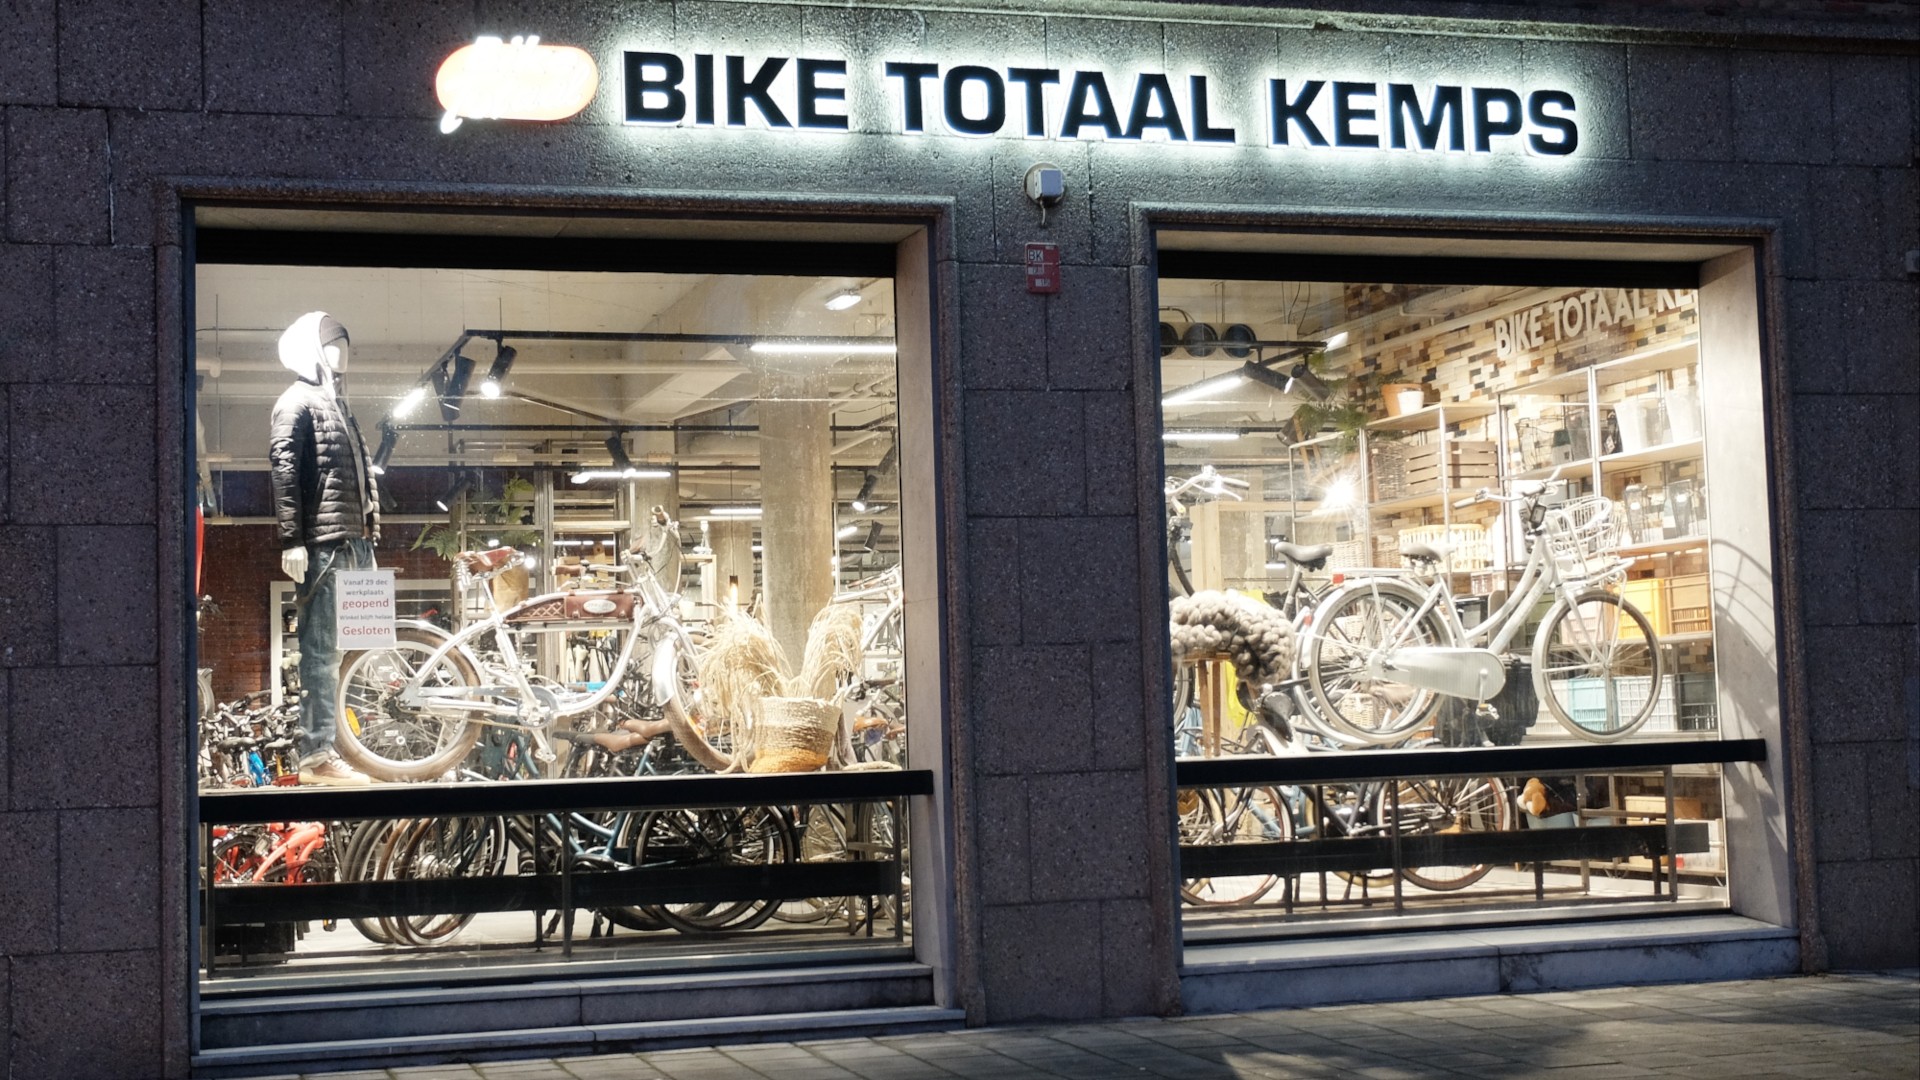 Kemps Bike Totaal